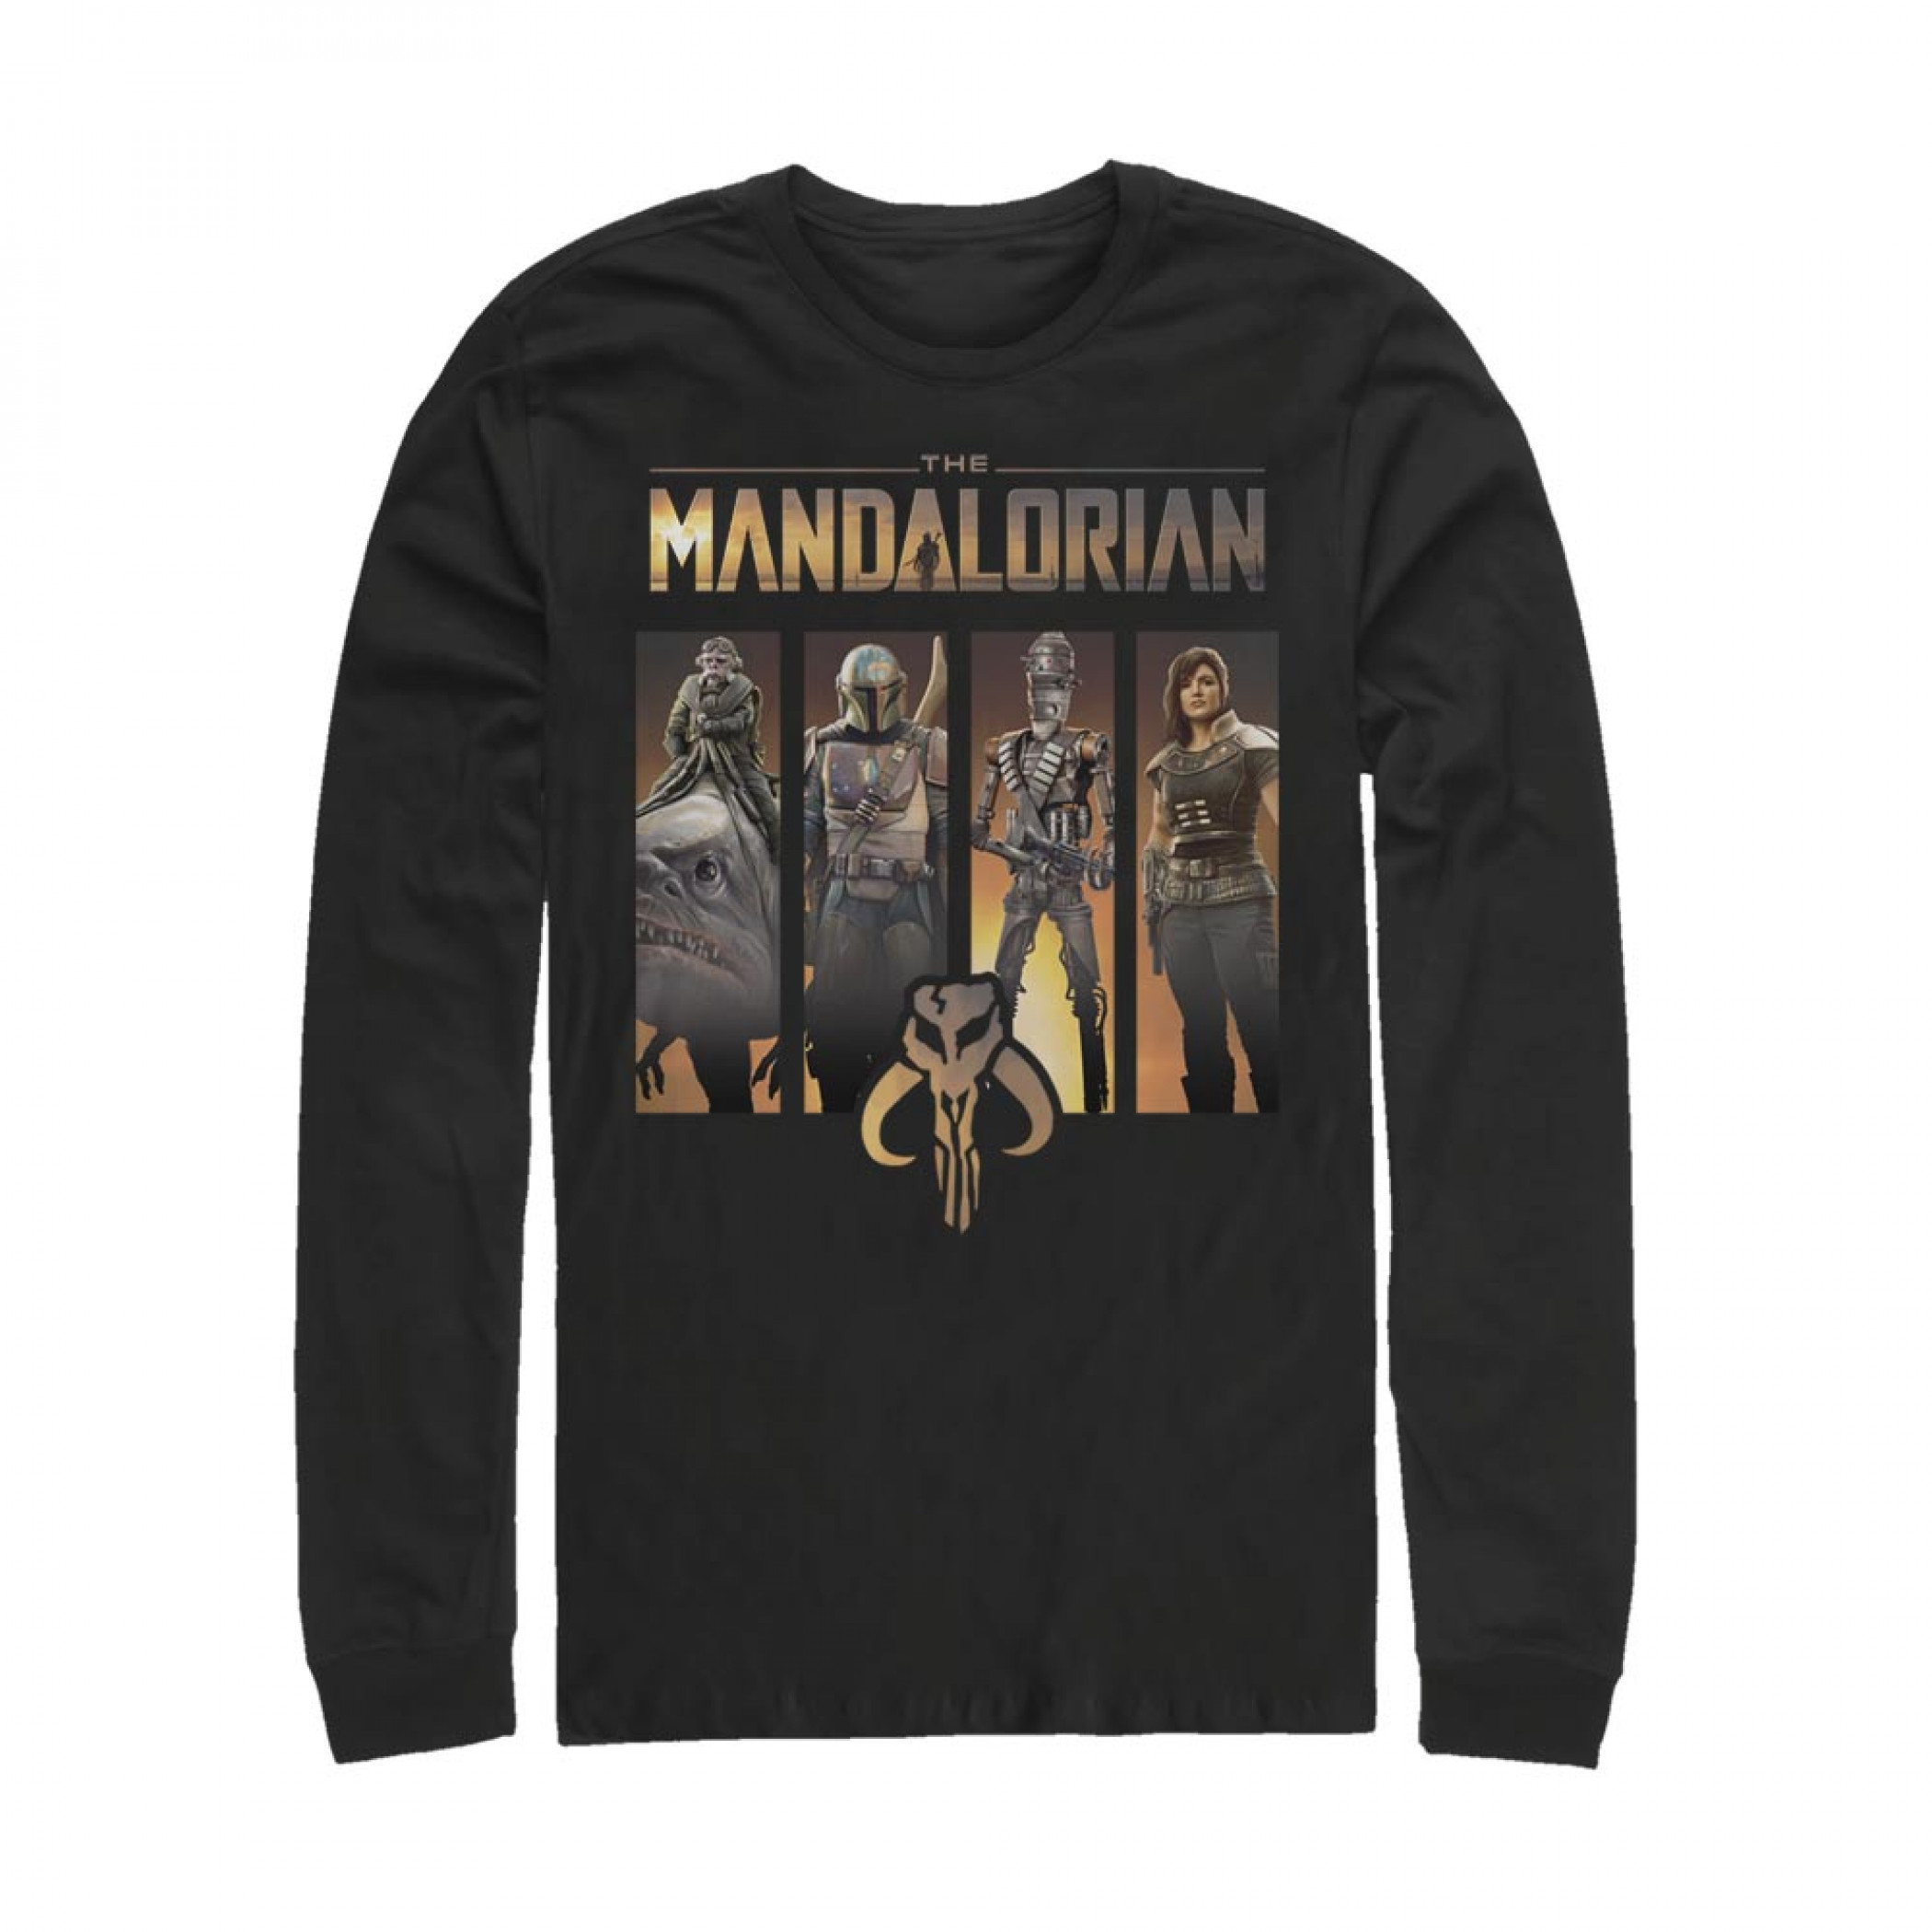 The Mandalorian Character Panels Long Sleeve Shirt